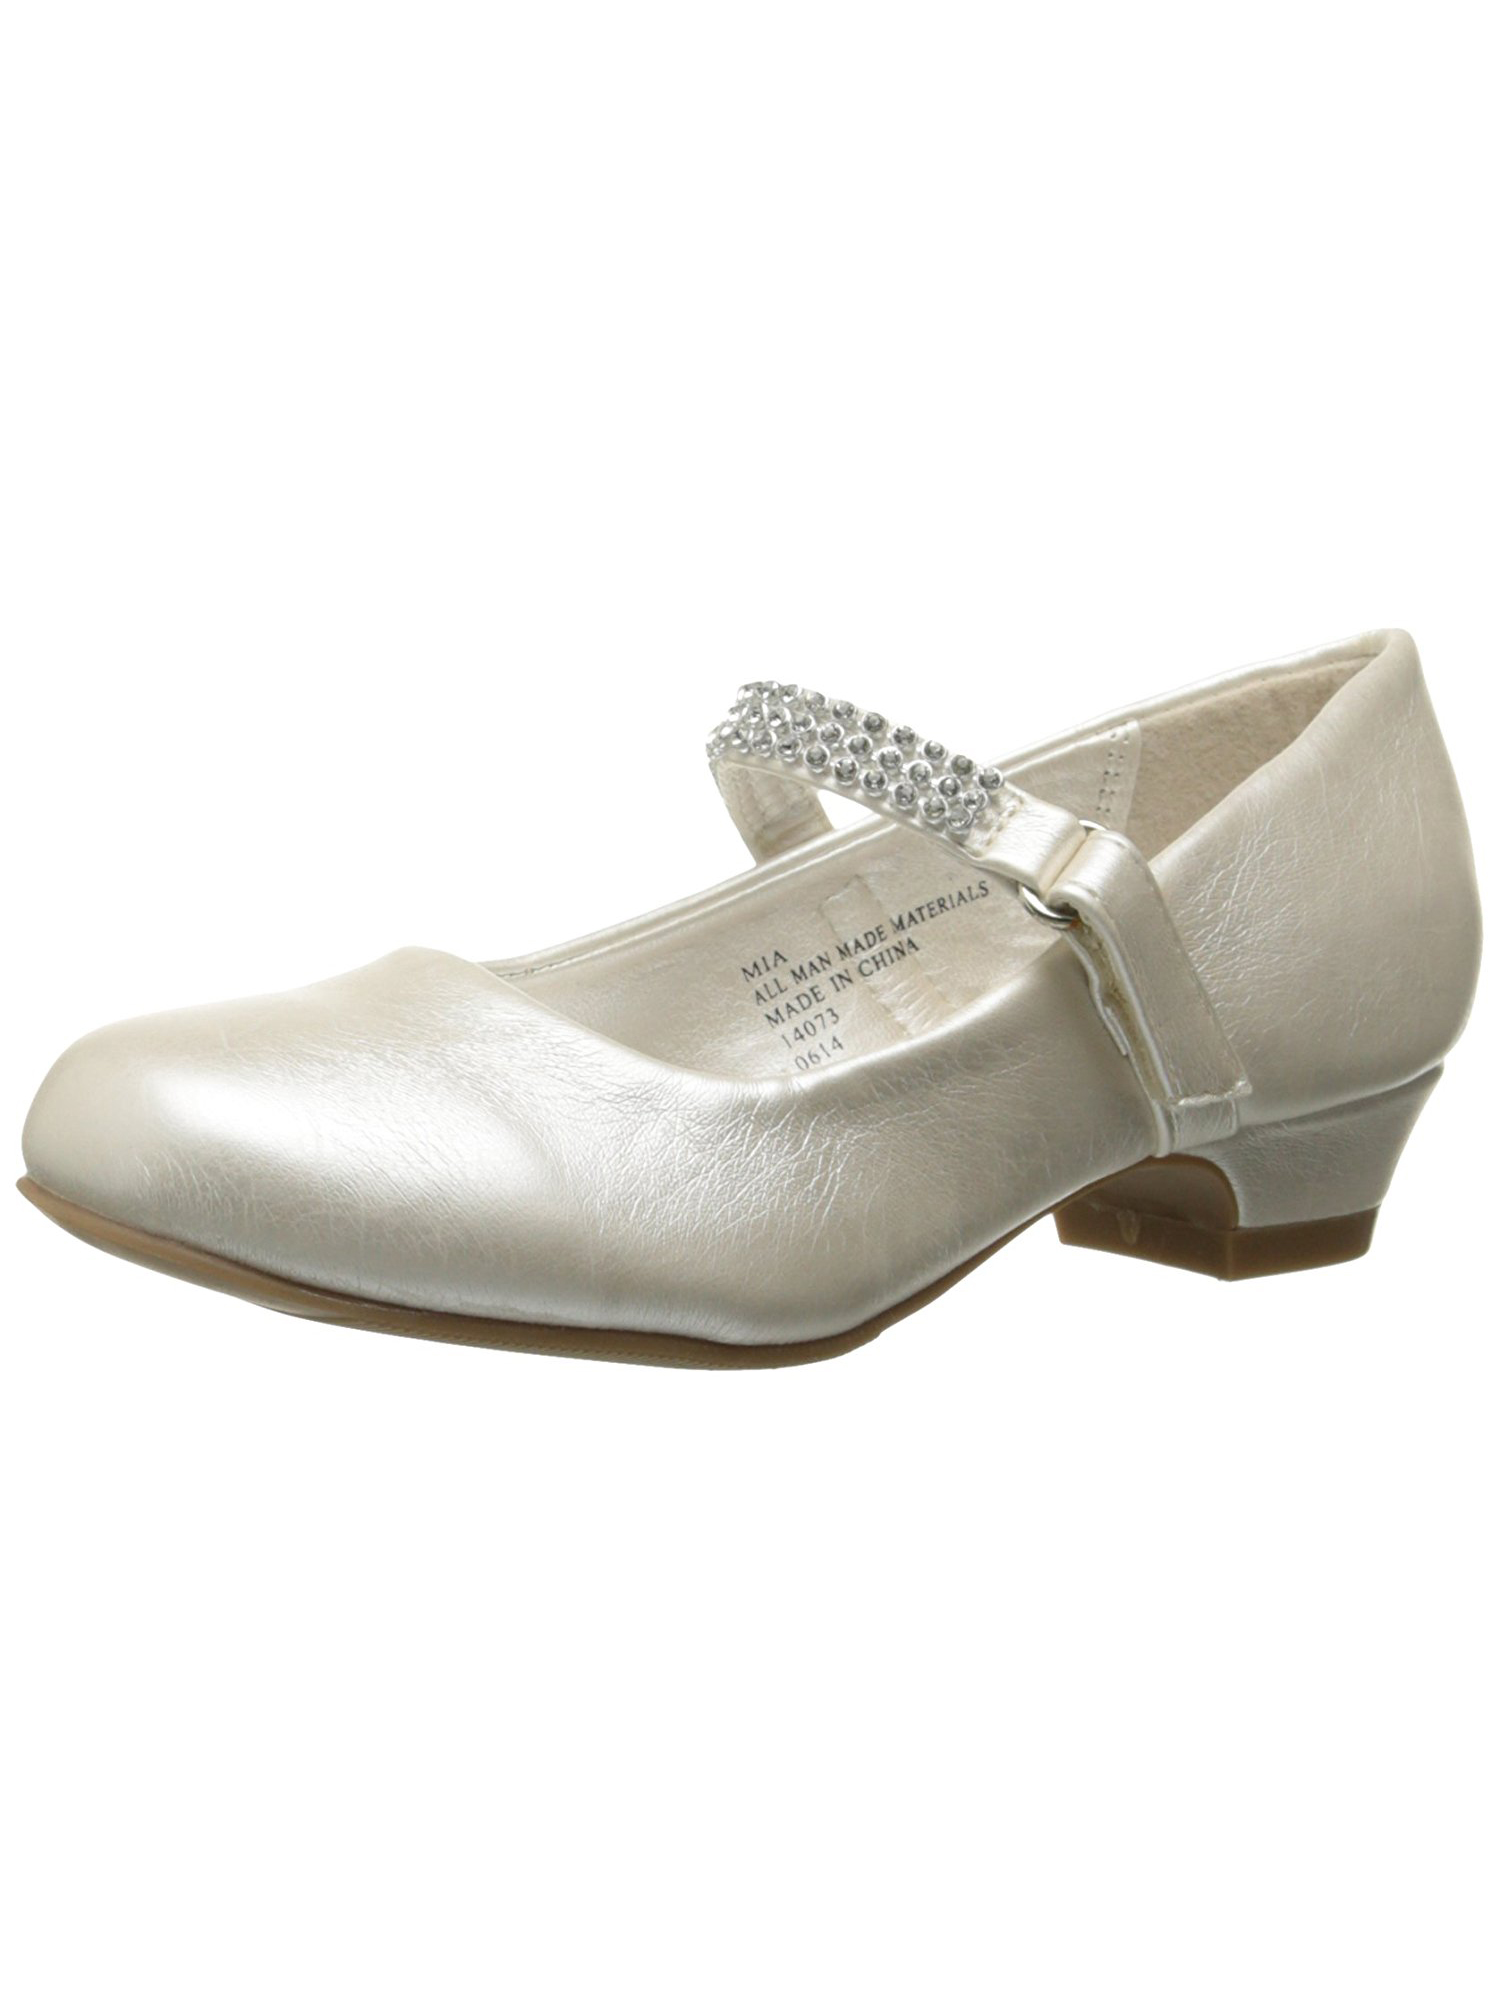 Girls Low Heel Dress Shoe With Rhinestone Strap (10, White)